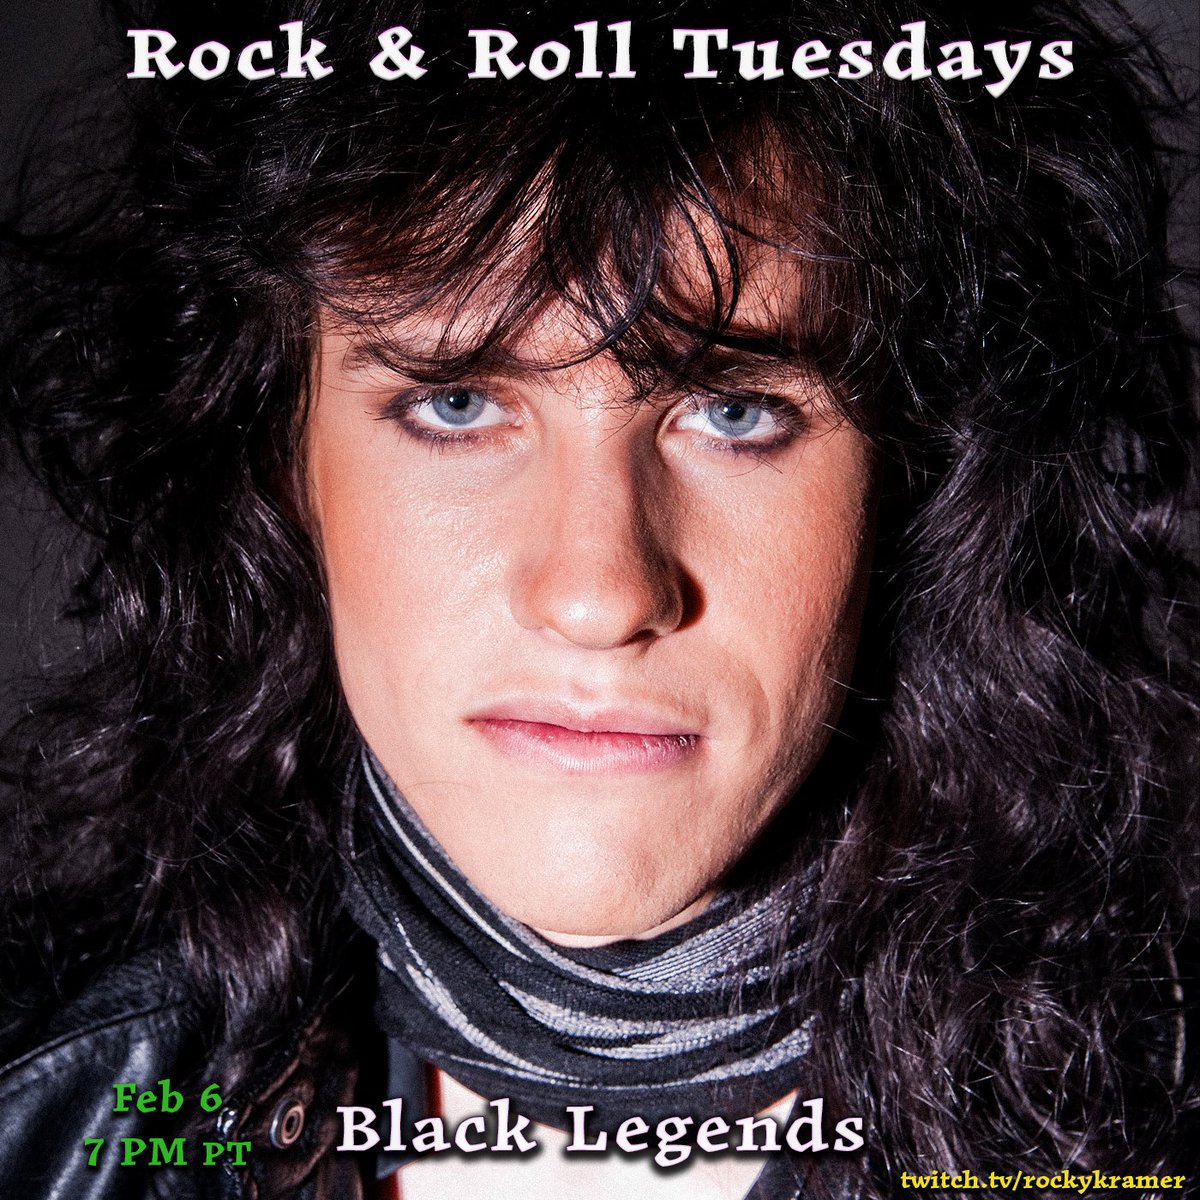 Rock & Roll Tuesdays: Black Legends February 6, 7 PM PT Twitch.tv/rockykramer